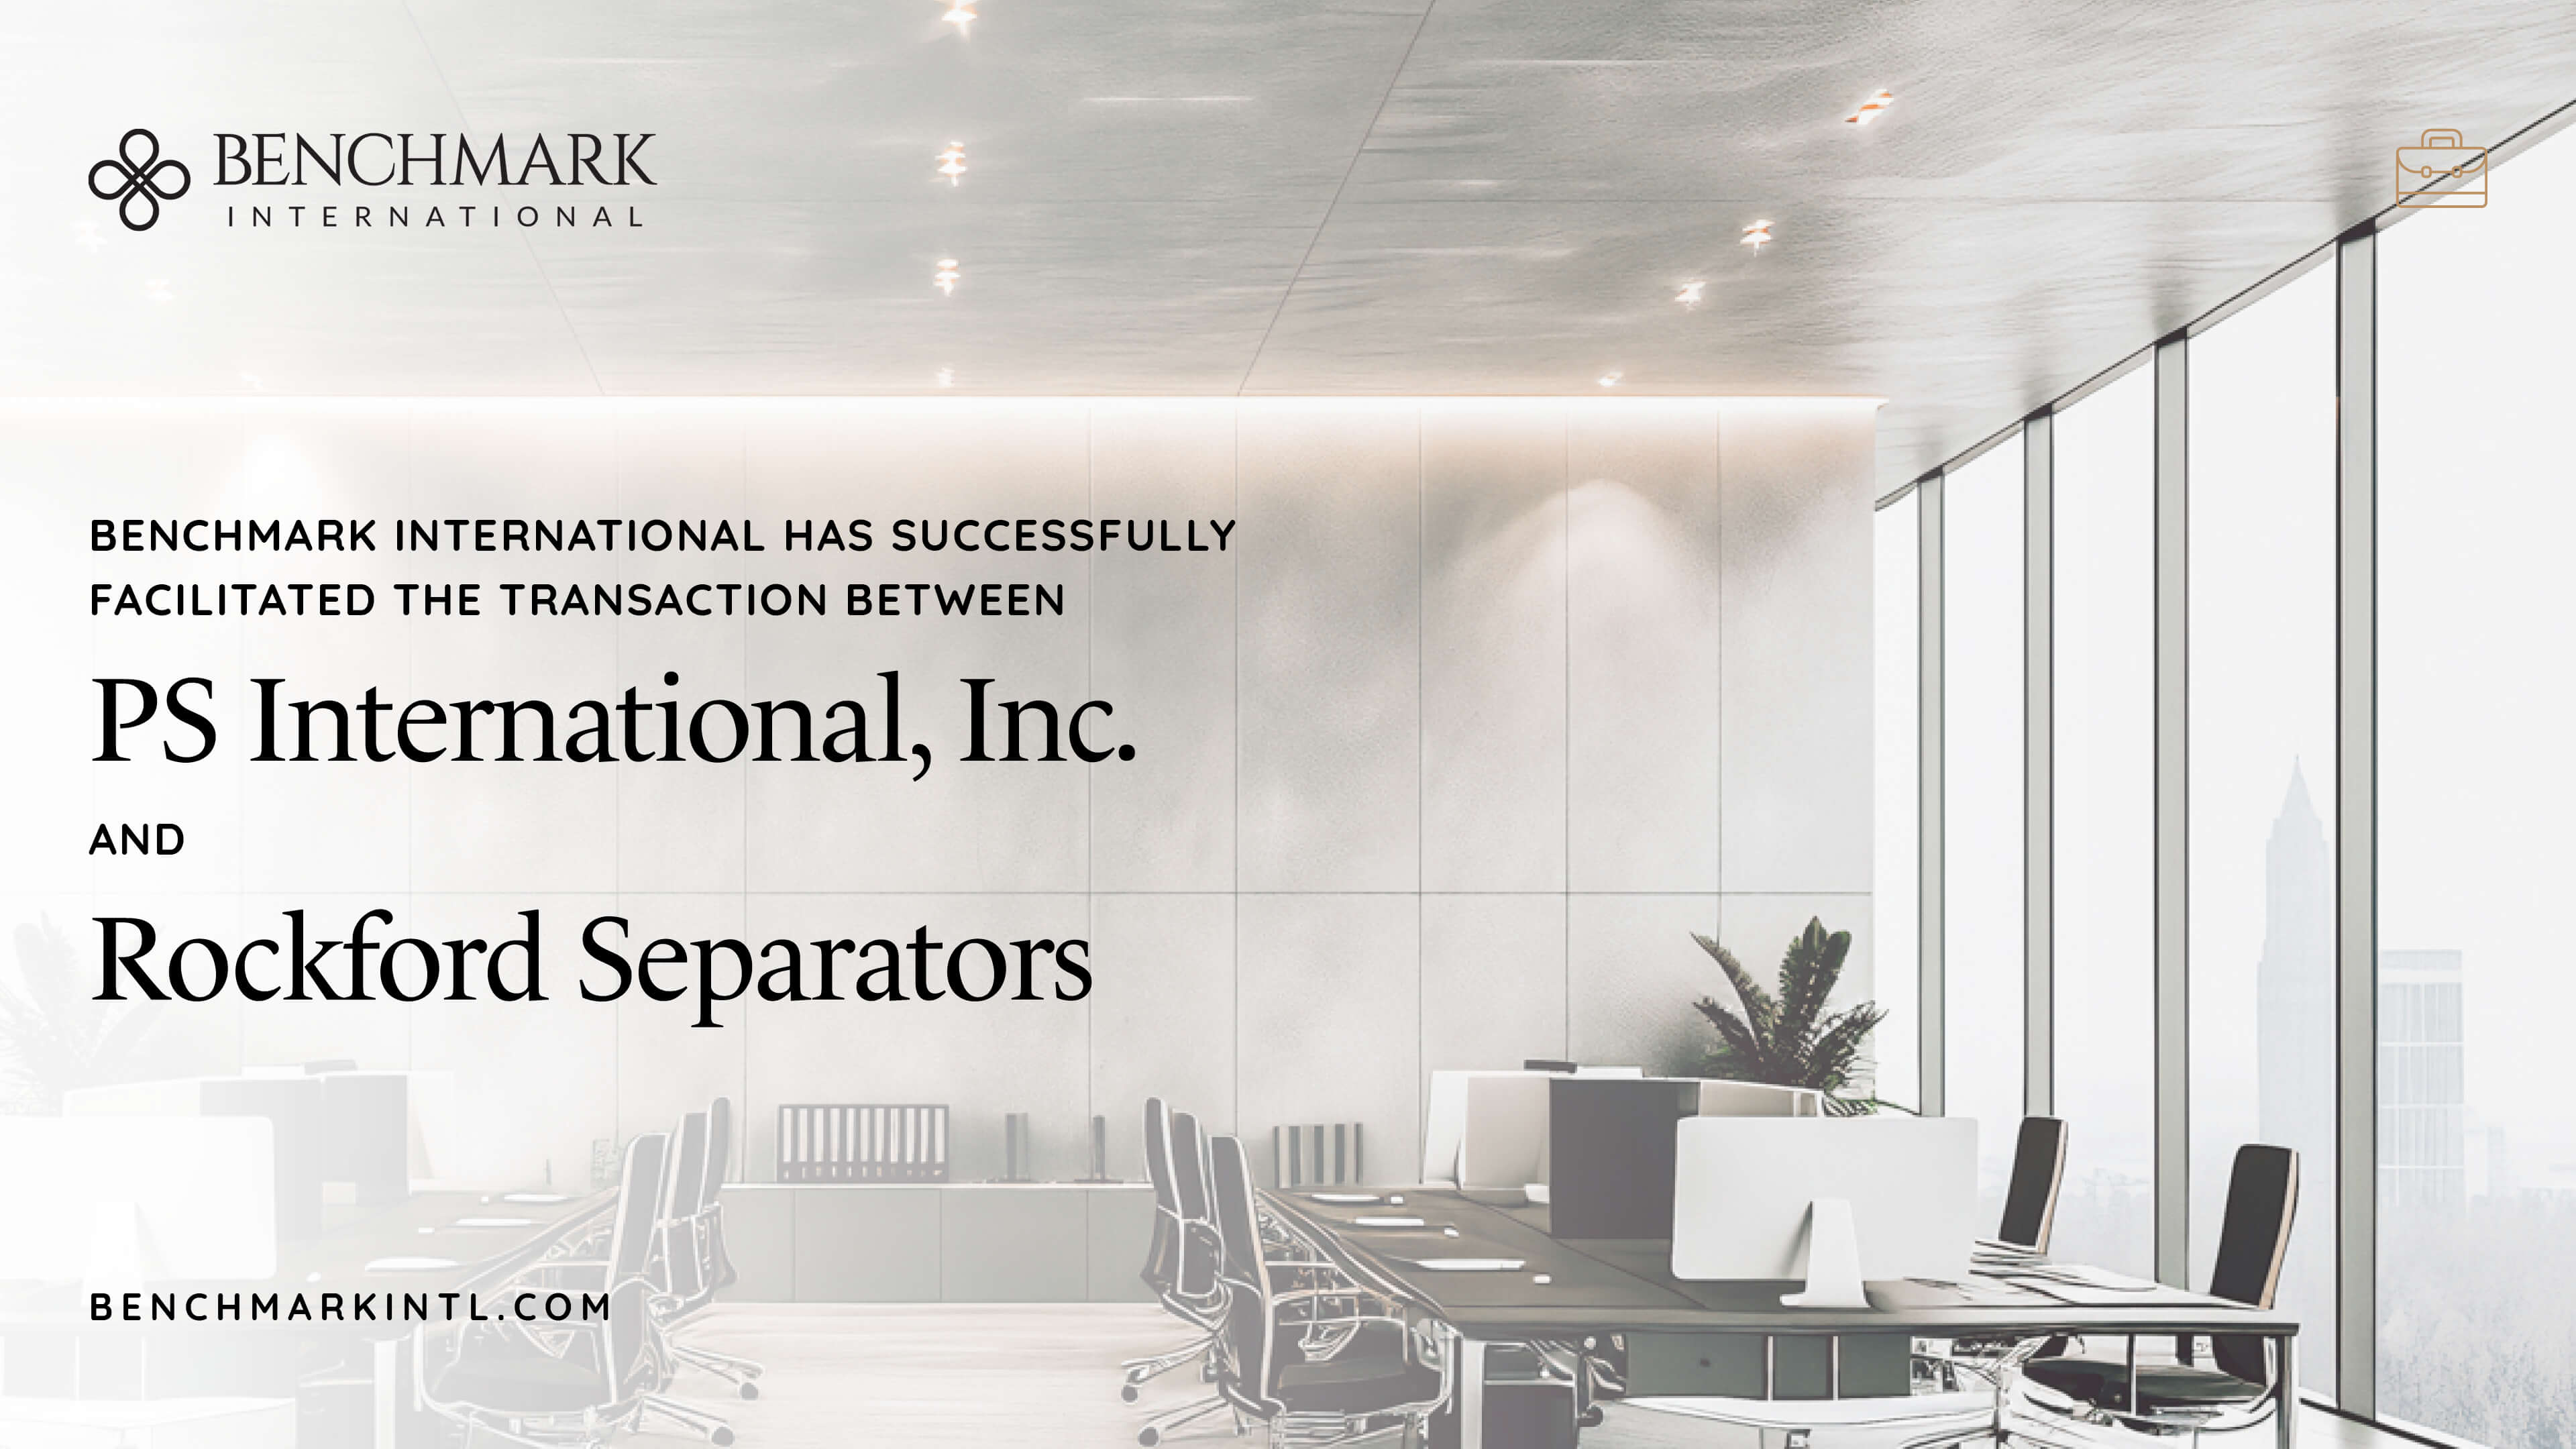 Benchmark International Successfully Facilitated The Transaction Between PS International, Inc. And Rockford Separators